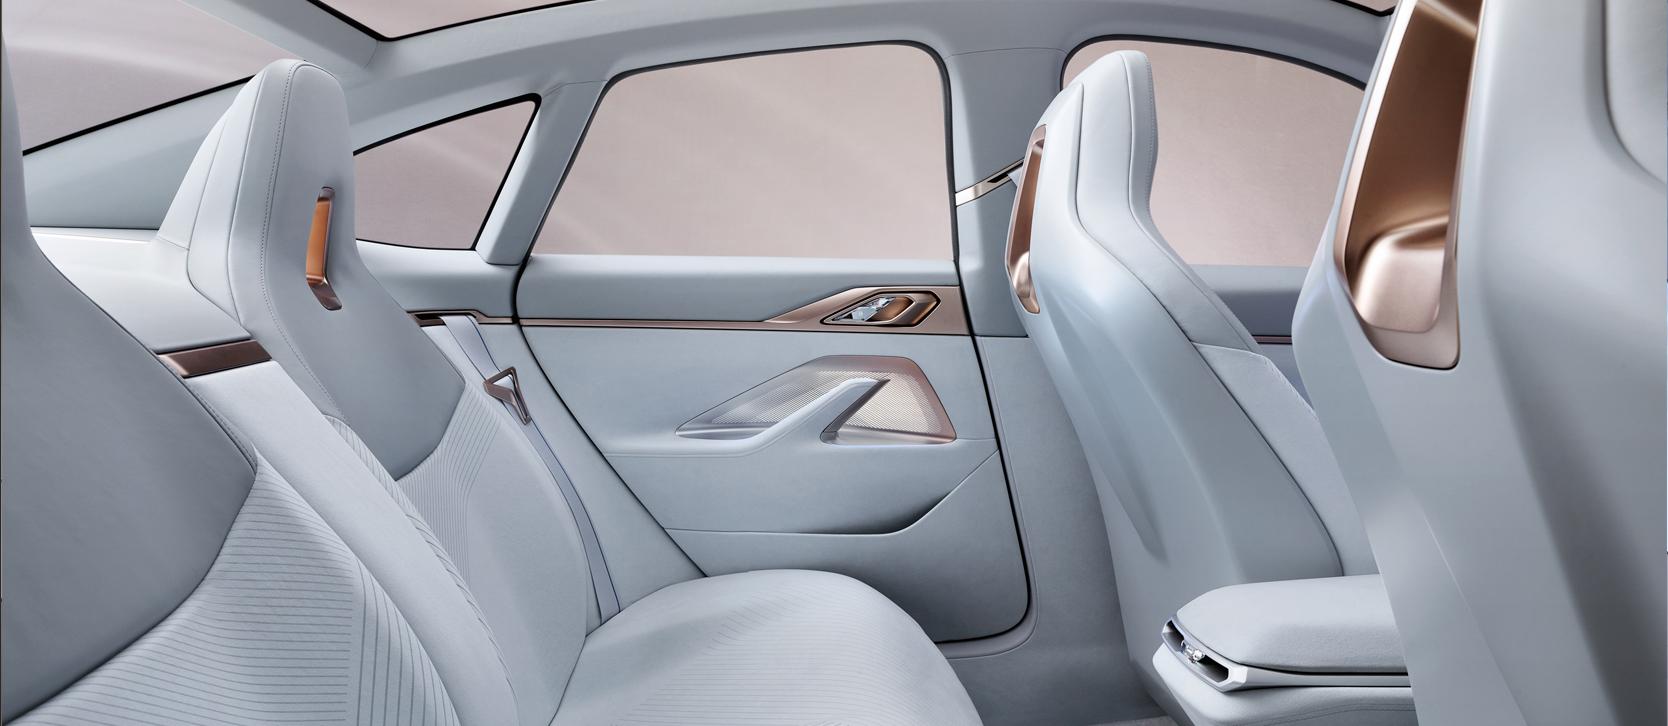 O designových přednostek BMW Concept i4 hovořil Adrian van Hooydonk, Senior Vice President BMW Group Design